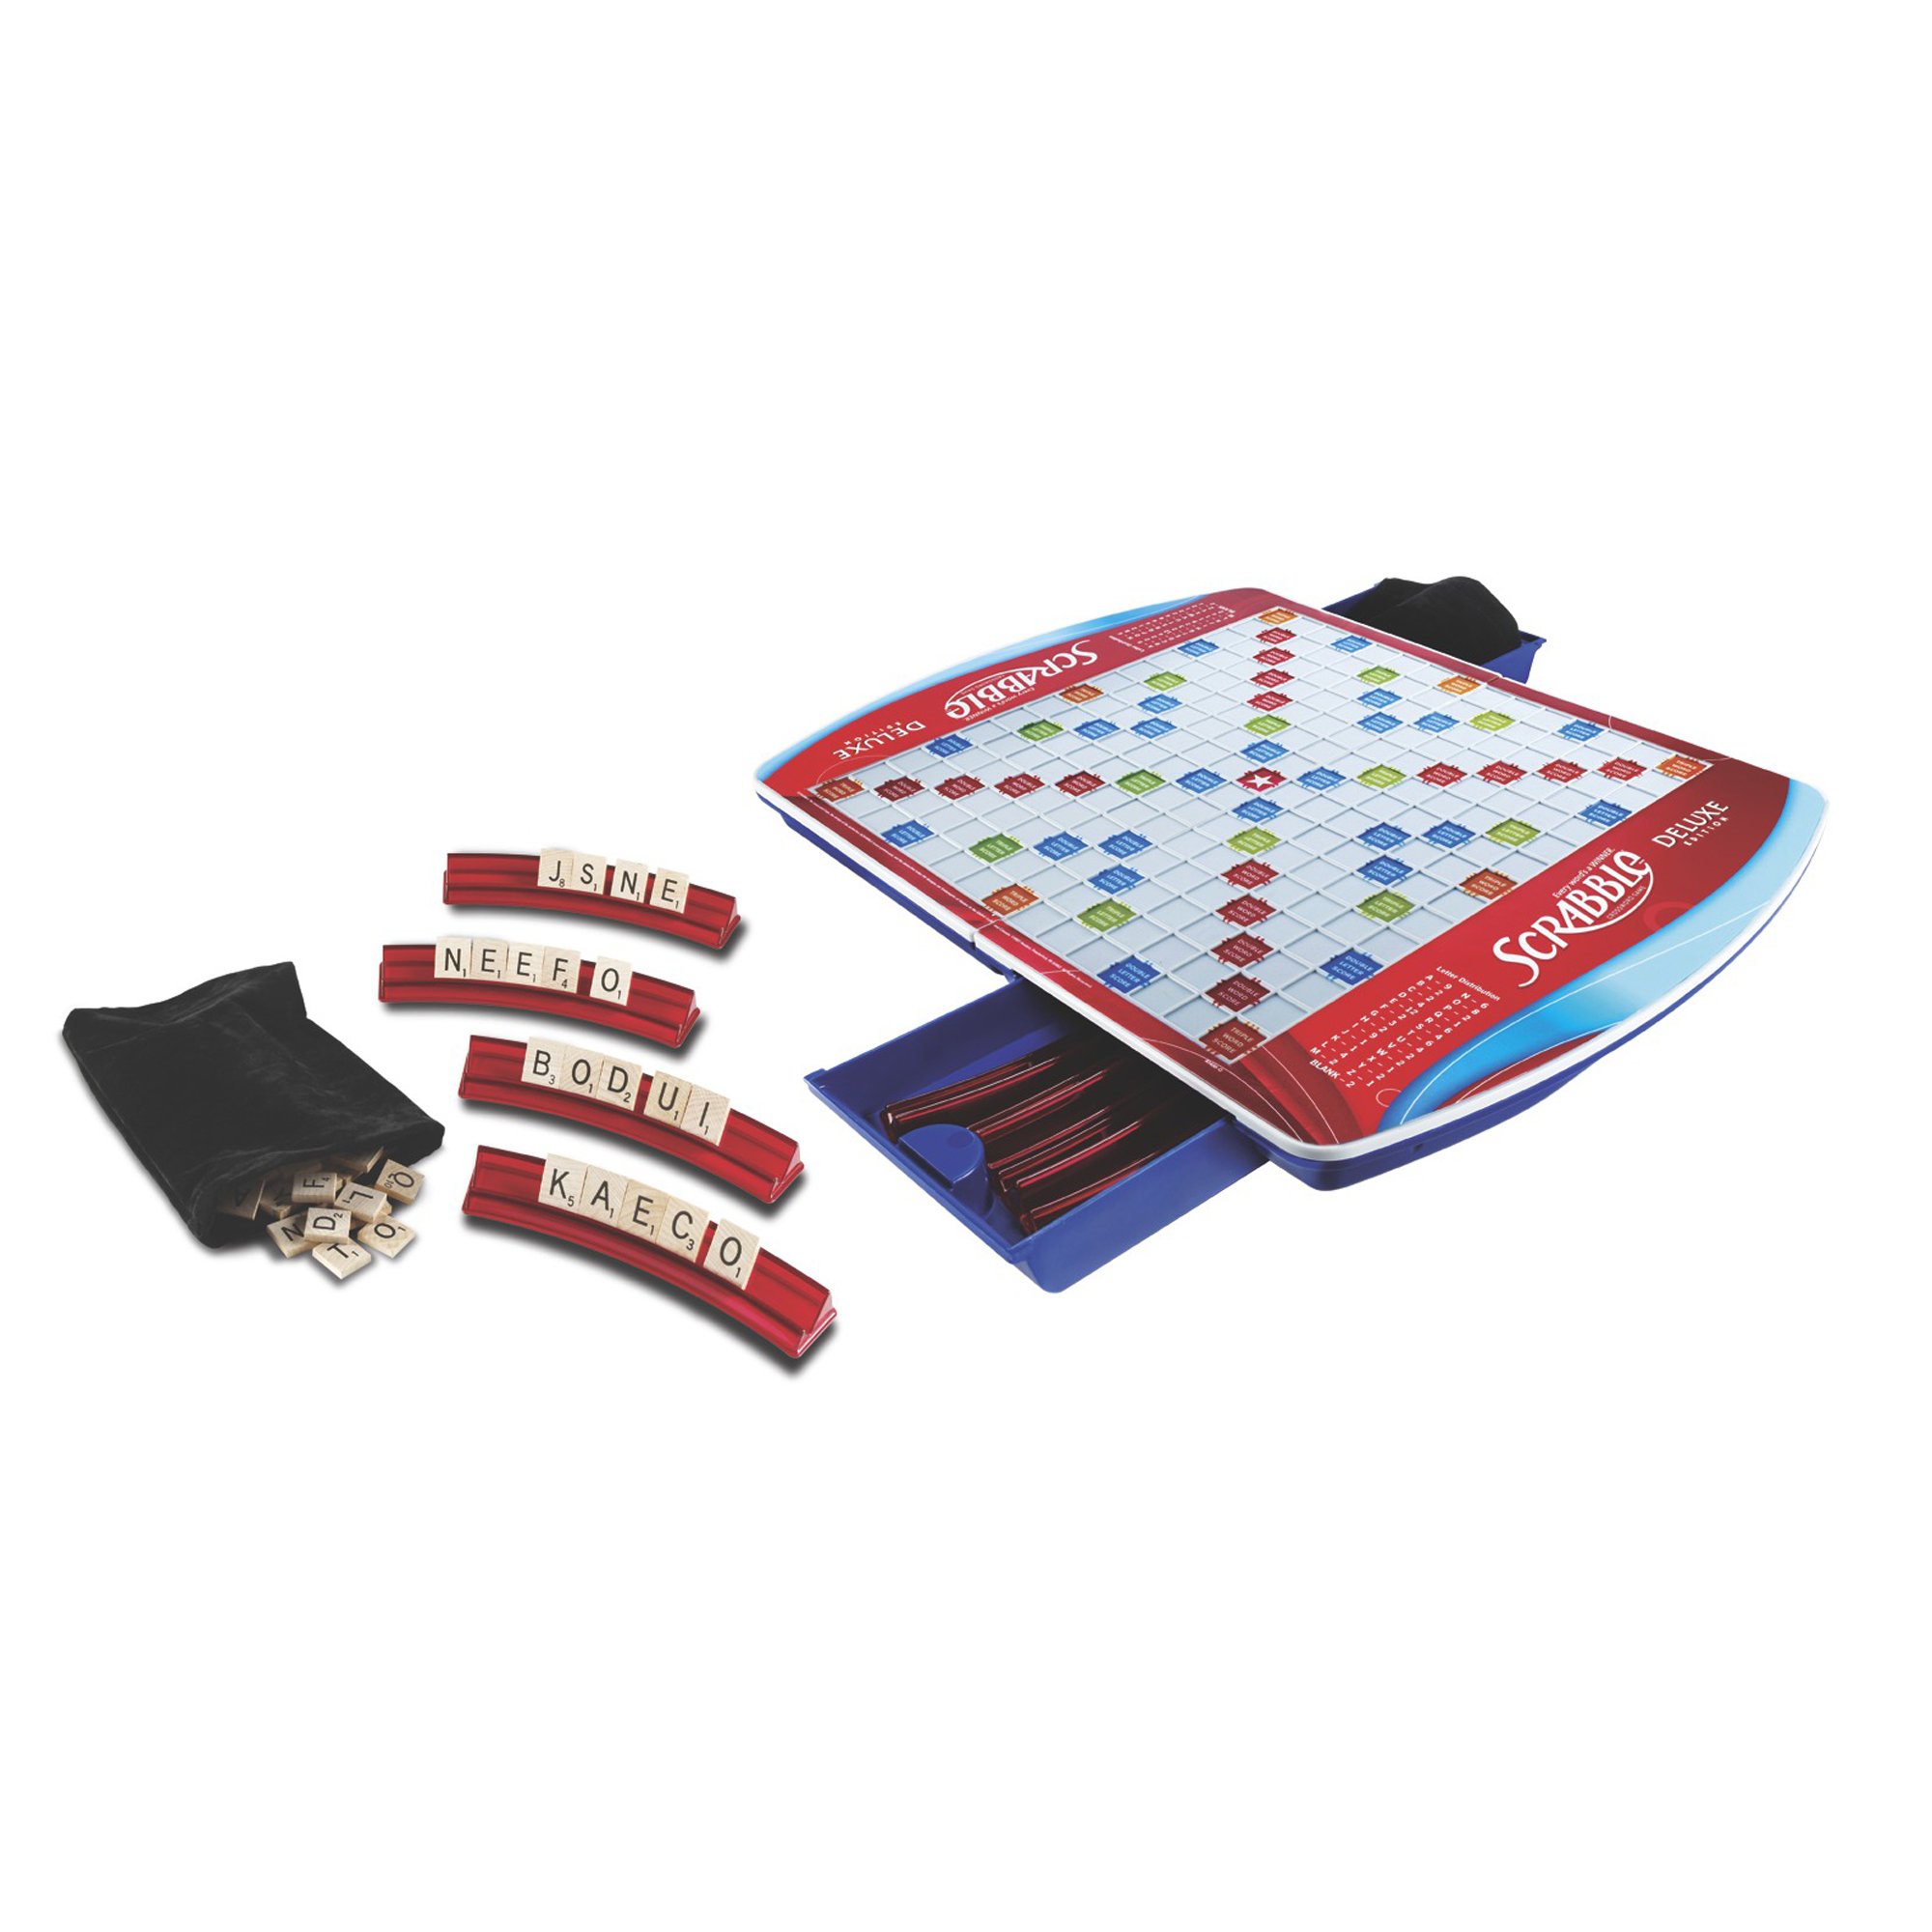 Scrabble Deluxe (EA)